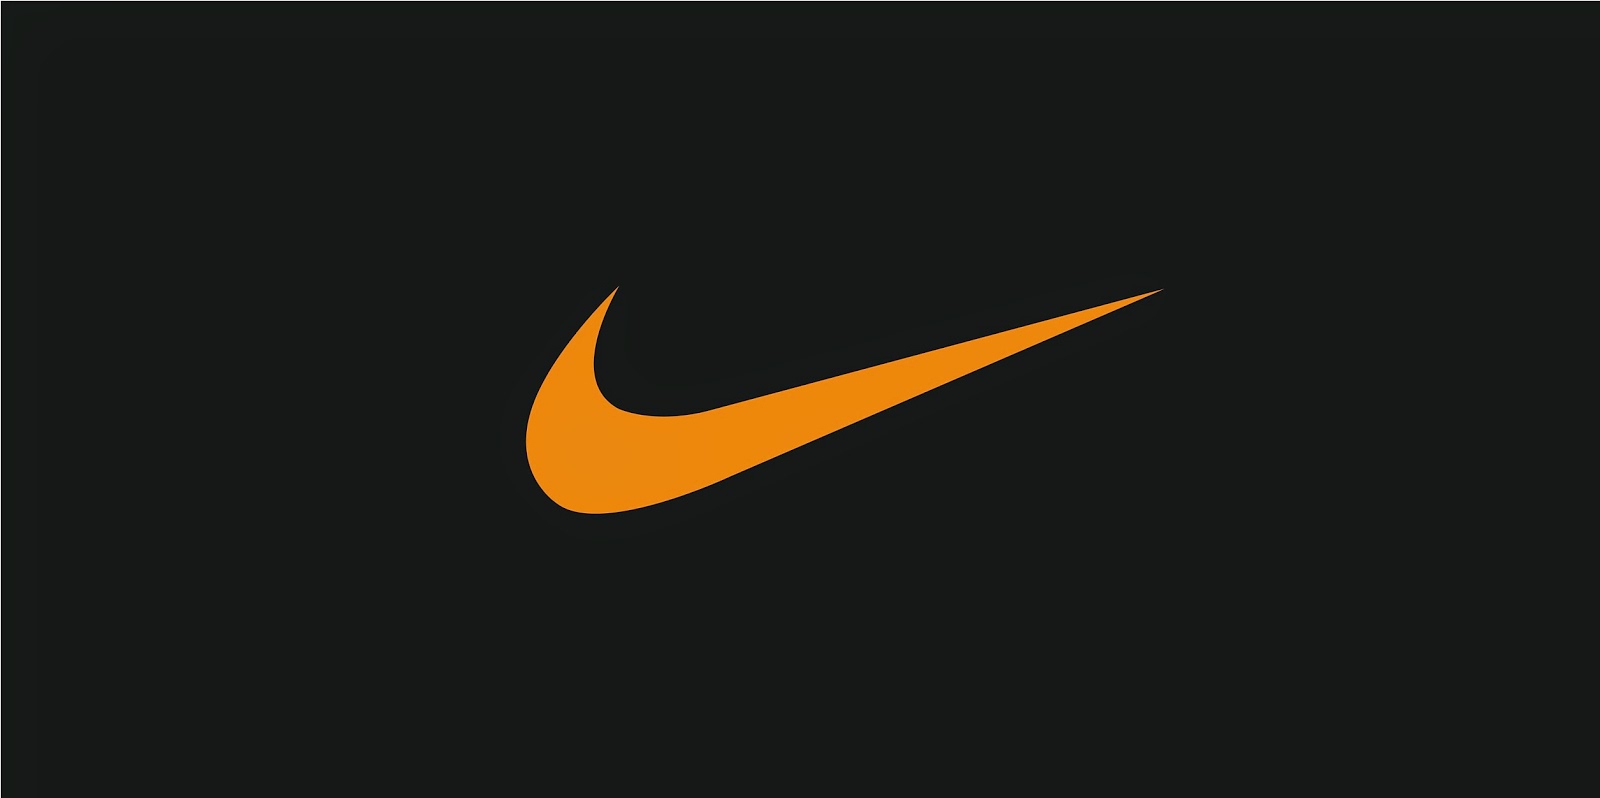 Cool Nike Logos 102 103171 Images HD Wallpapers Wallfoycom